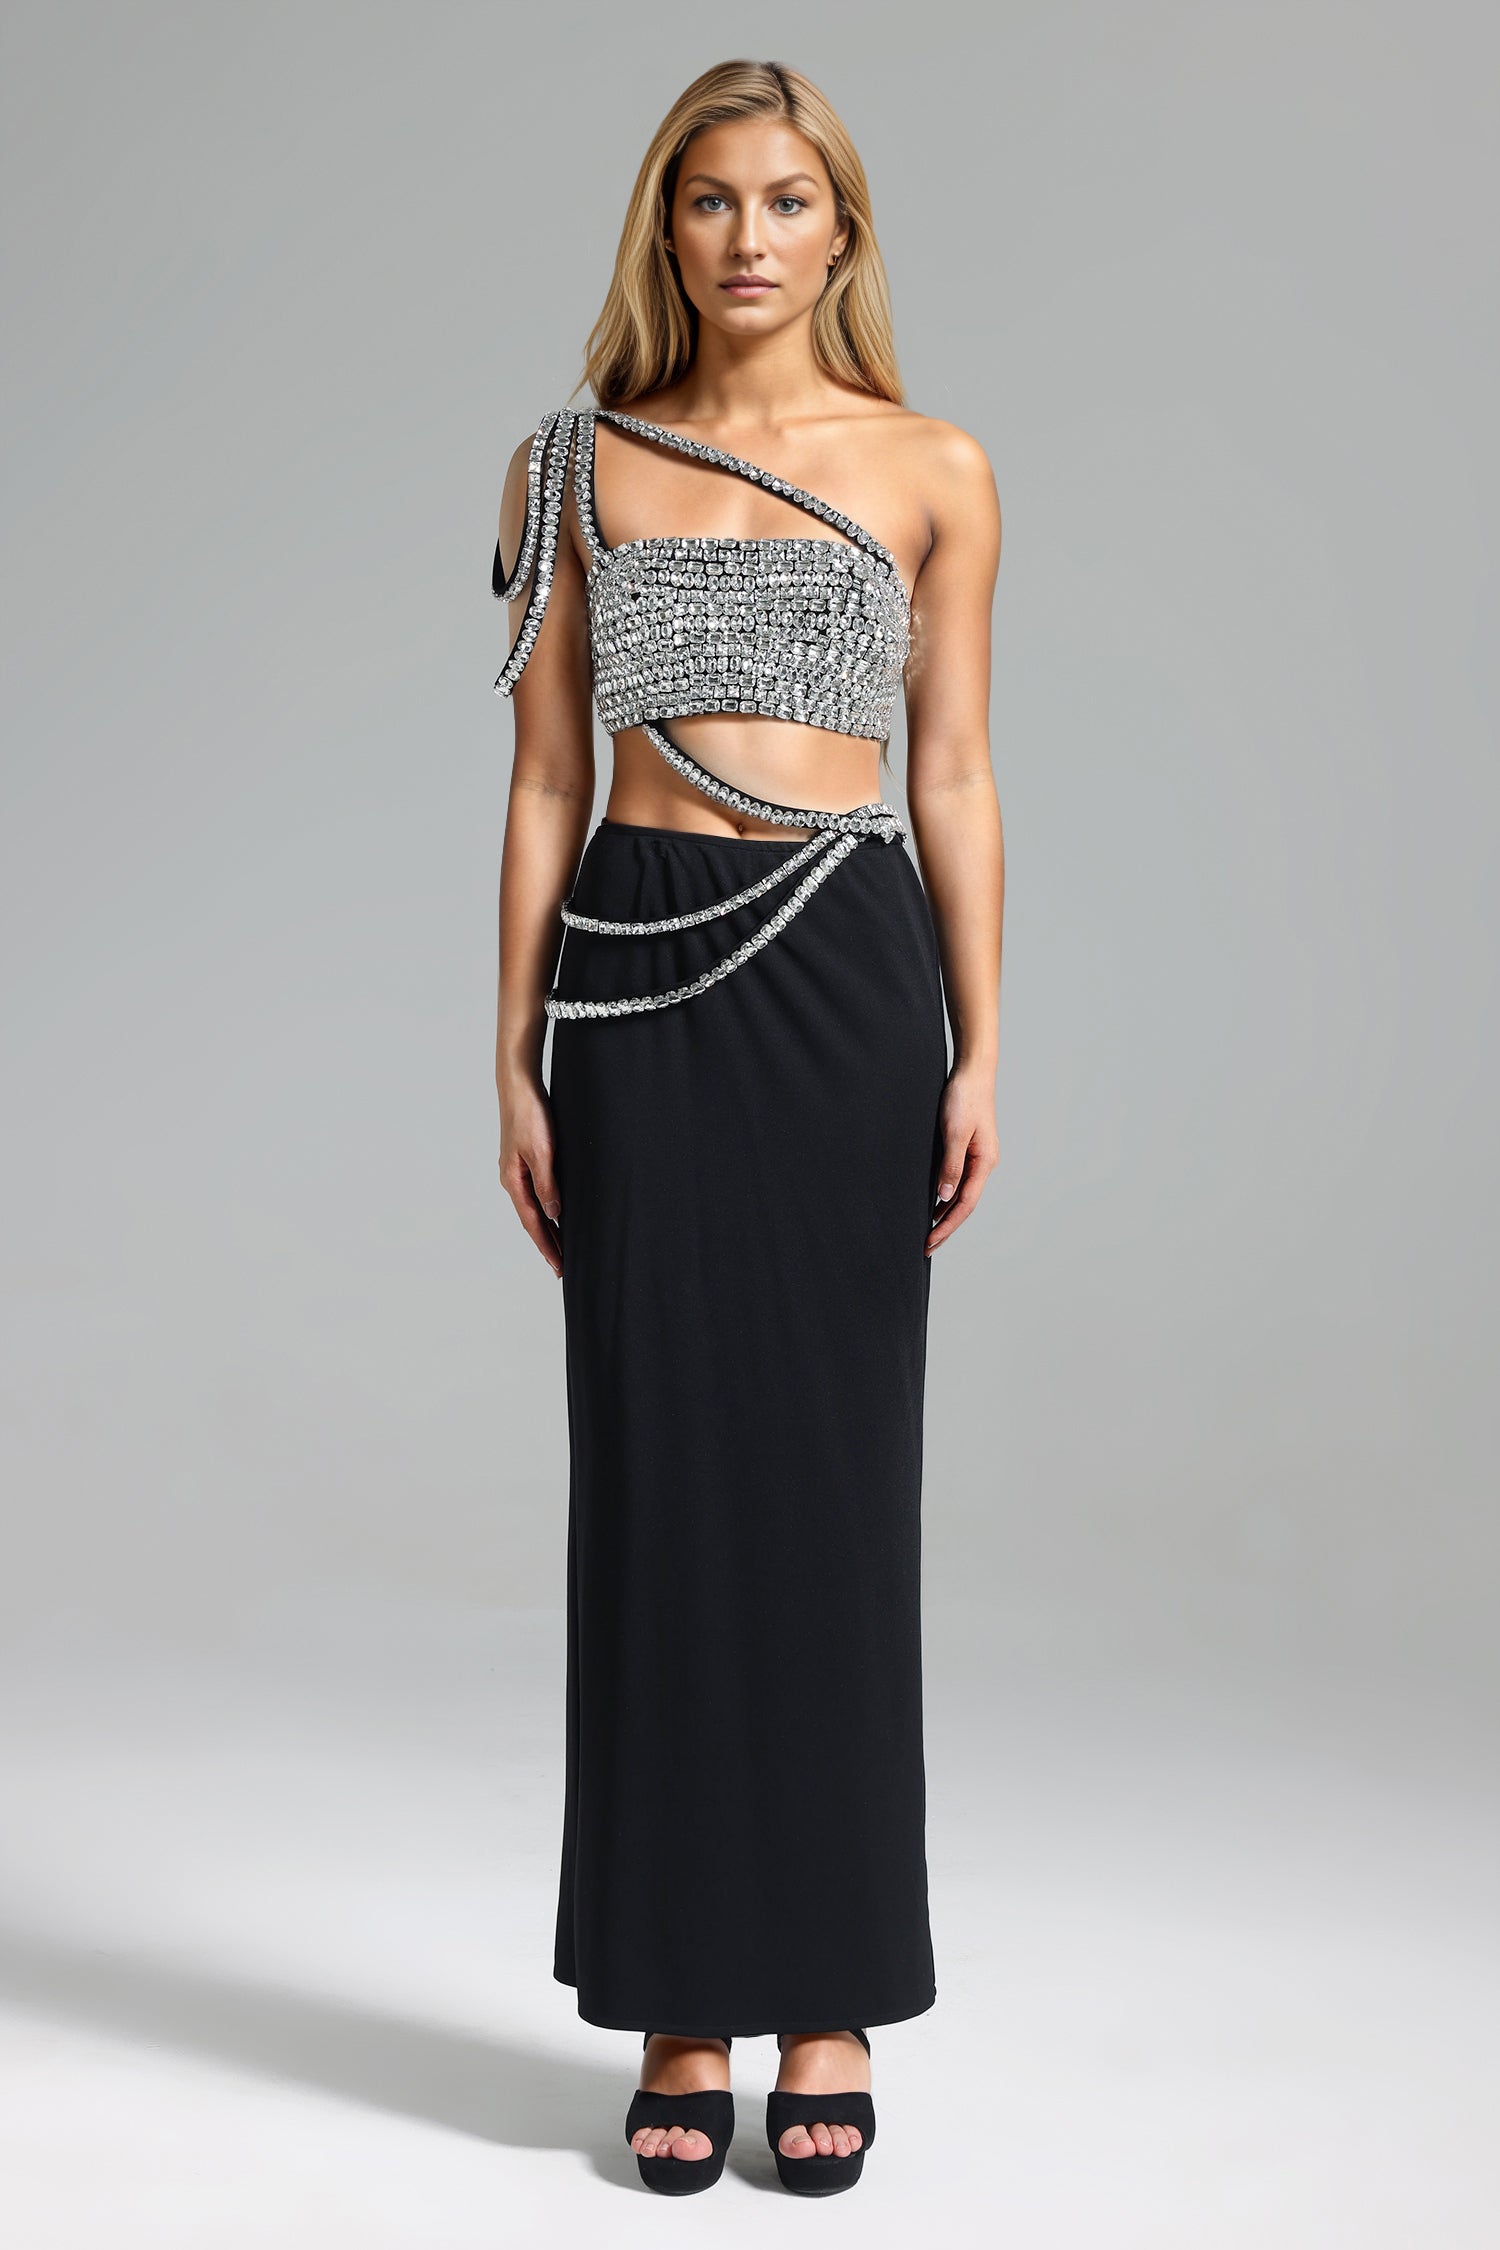 Vlafa Diamante One Shoulder Top Skirt Set